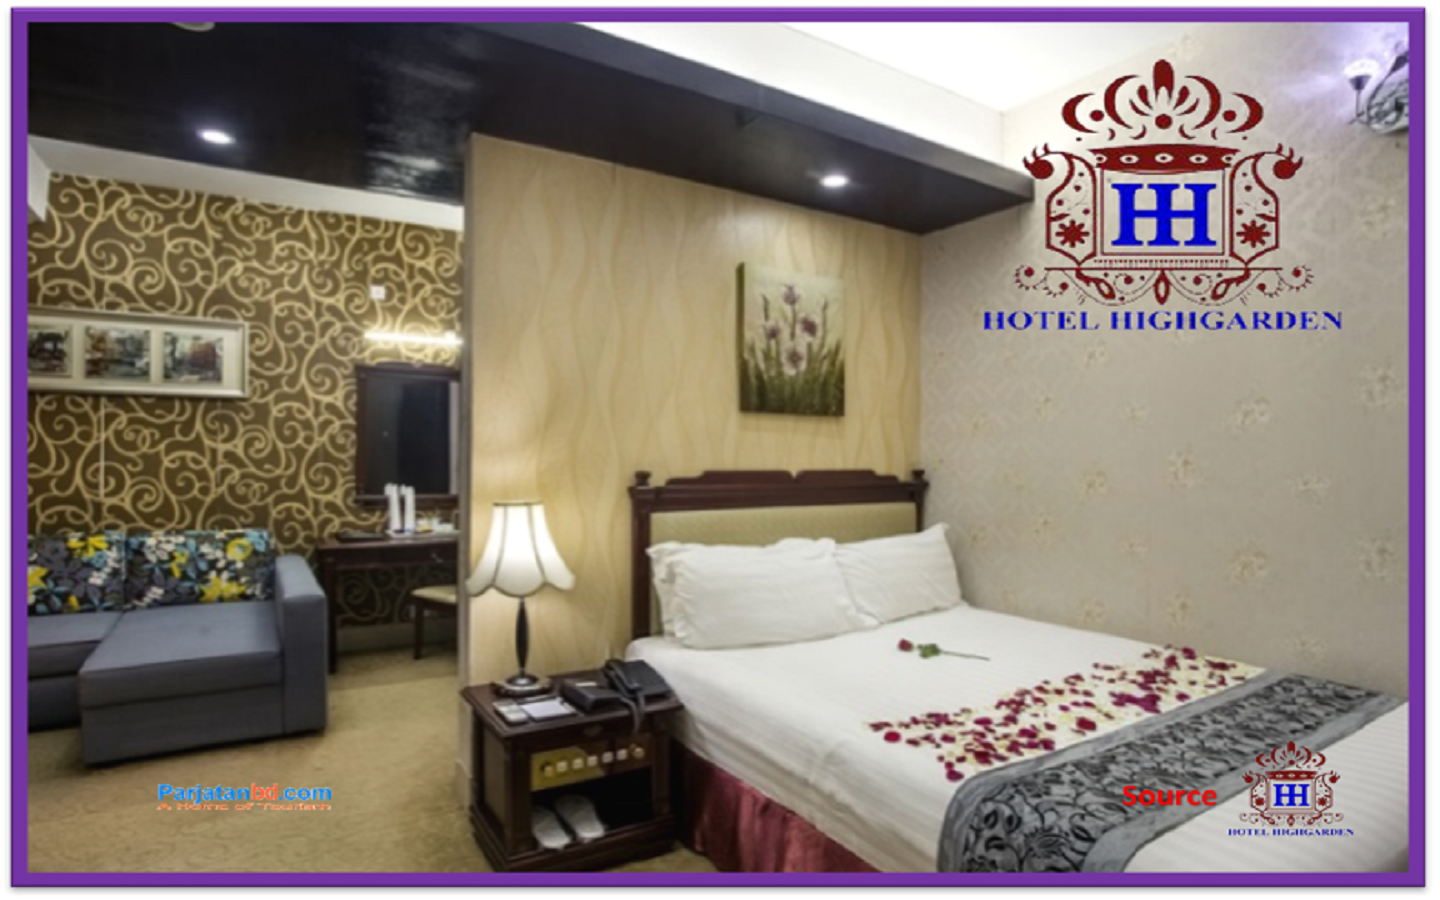 Room Junior Suite -1, Hotel Height Garden. Uttara